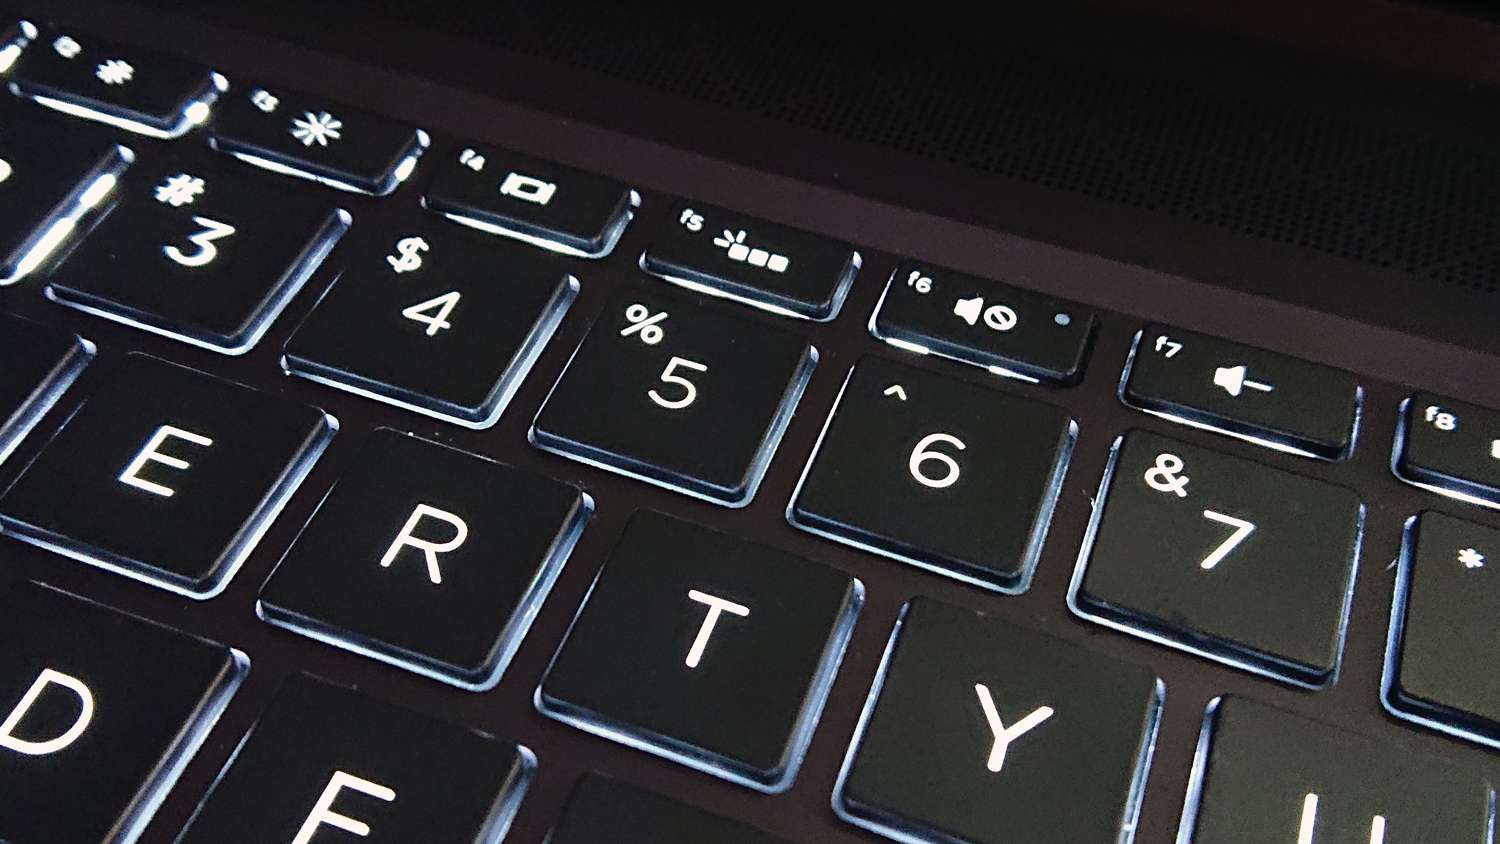 How Do I Turn Off The Light On My Keyboard HP Ultrabook